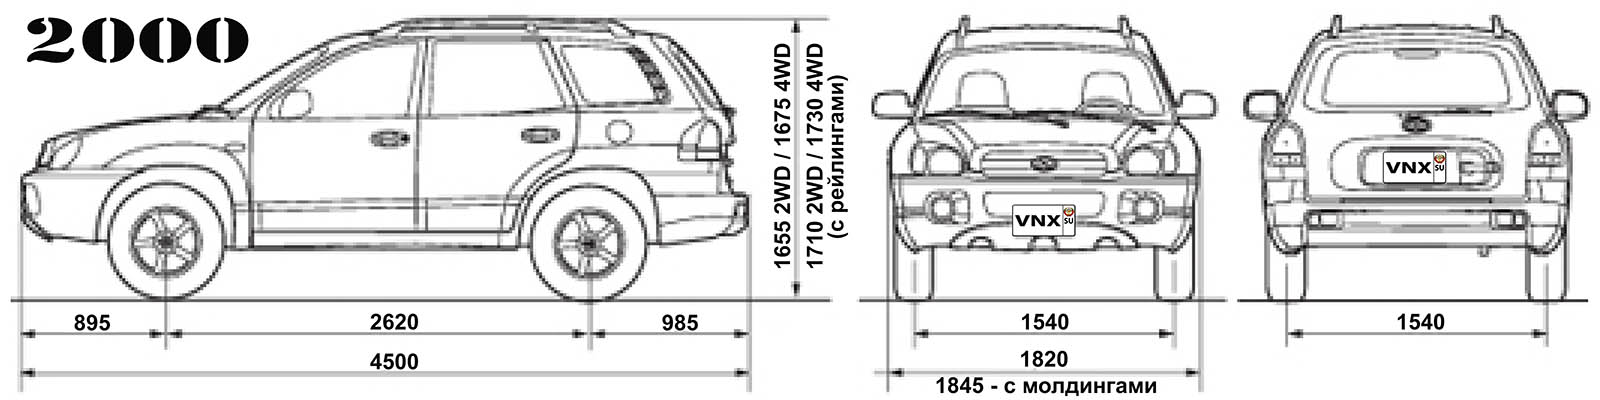 Габаритные размеры Хундай Санта Фе Классик (dimensions Hyundai Santa Fe Classic)